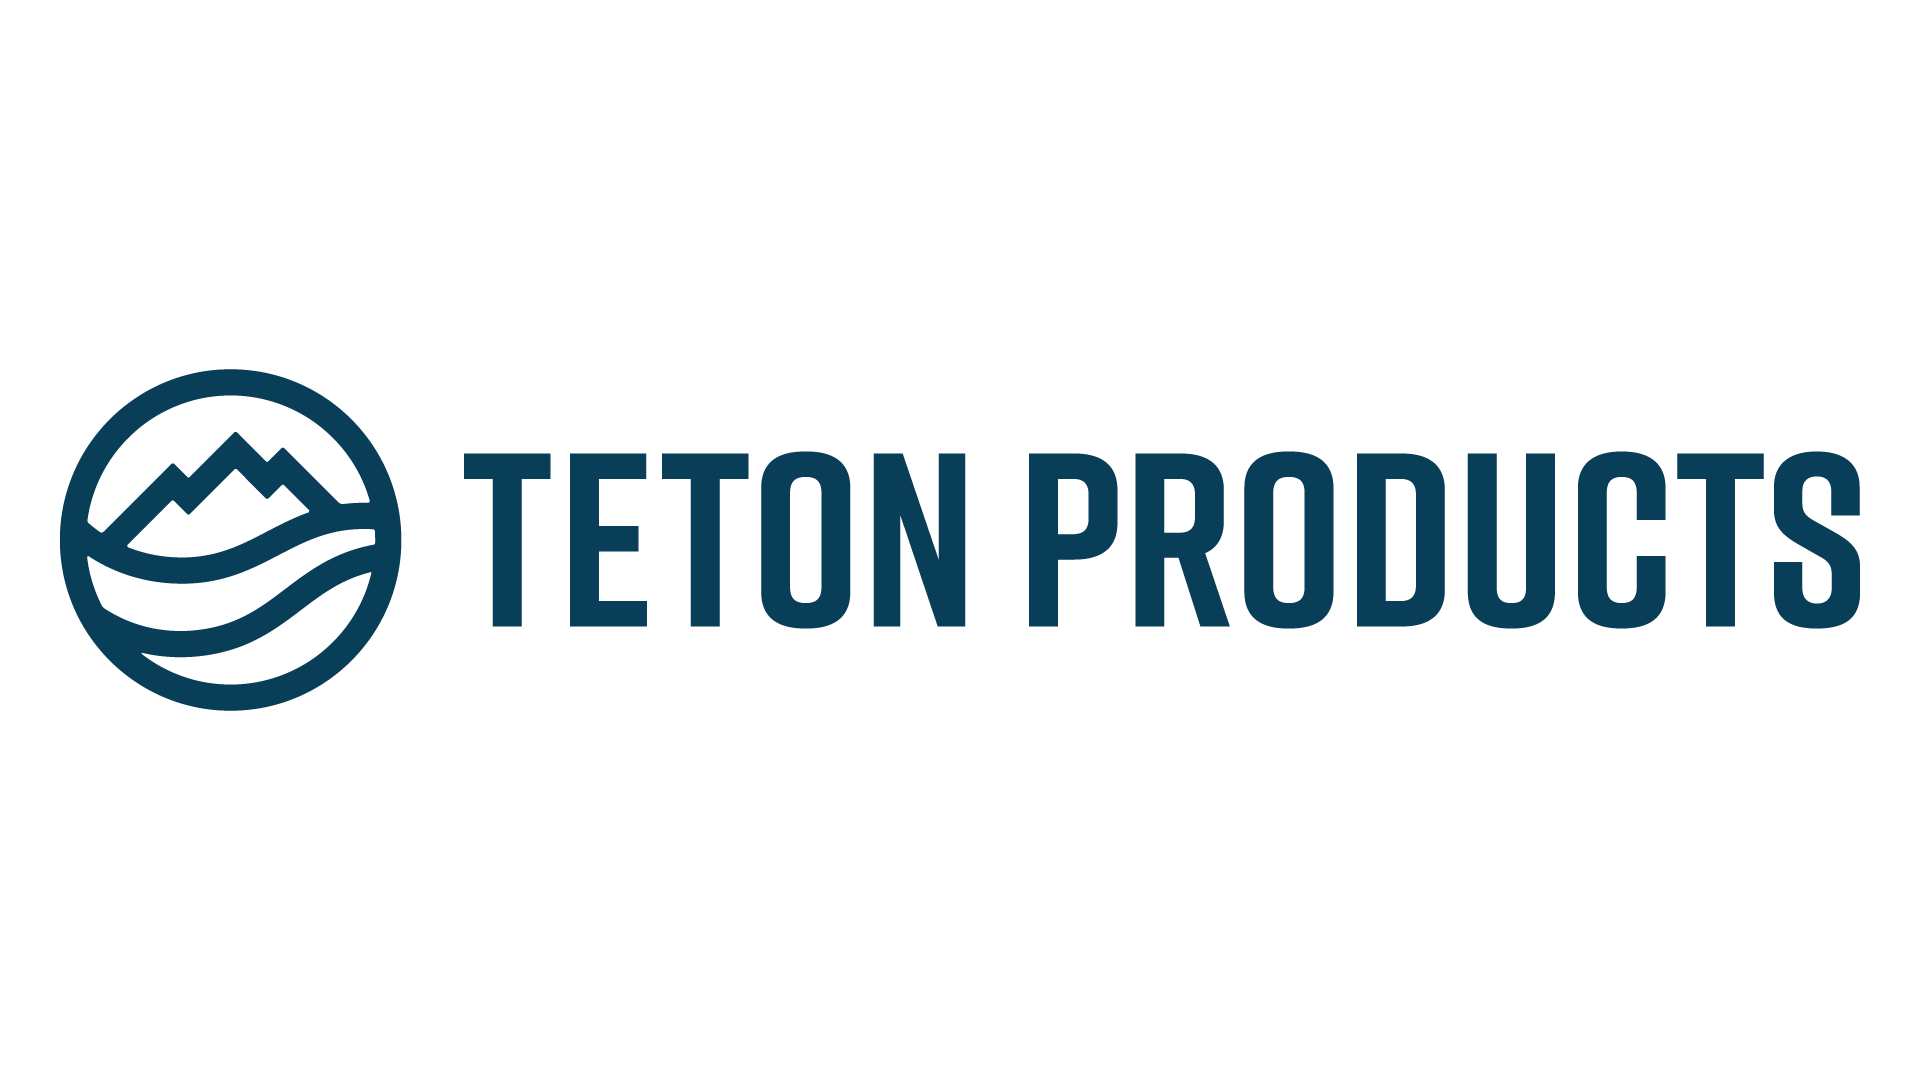 TetonProducts